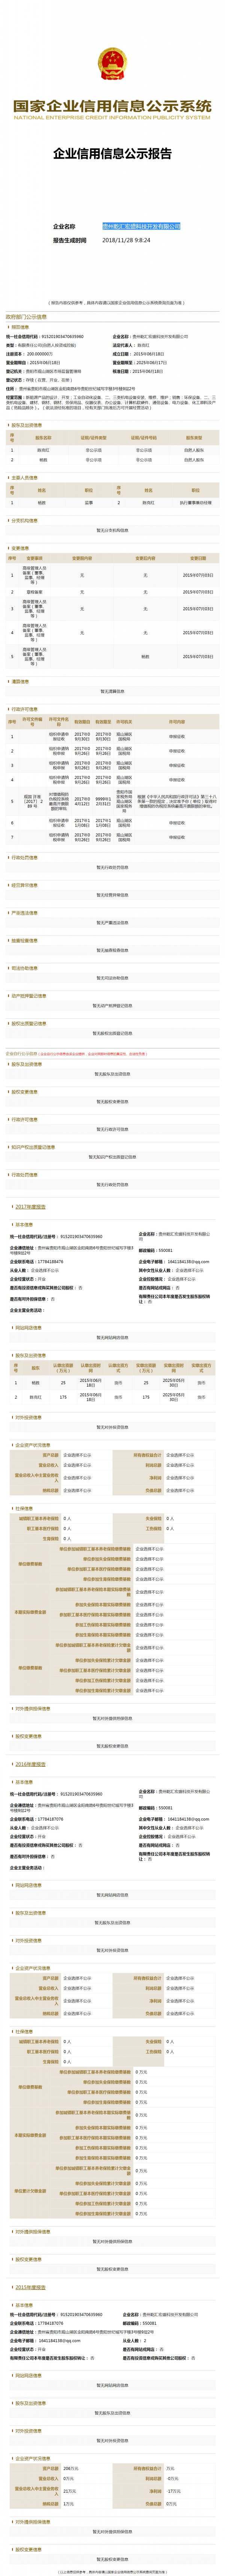 conew_贵州乾汇宏盛科技开发有限公司 (1)